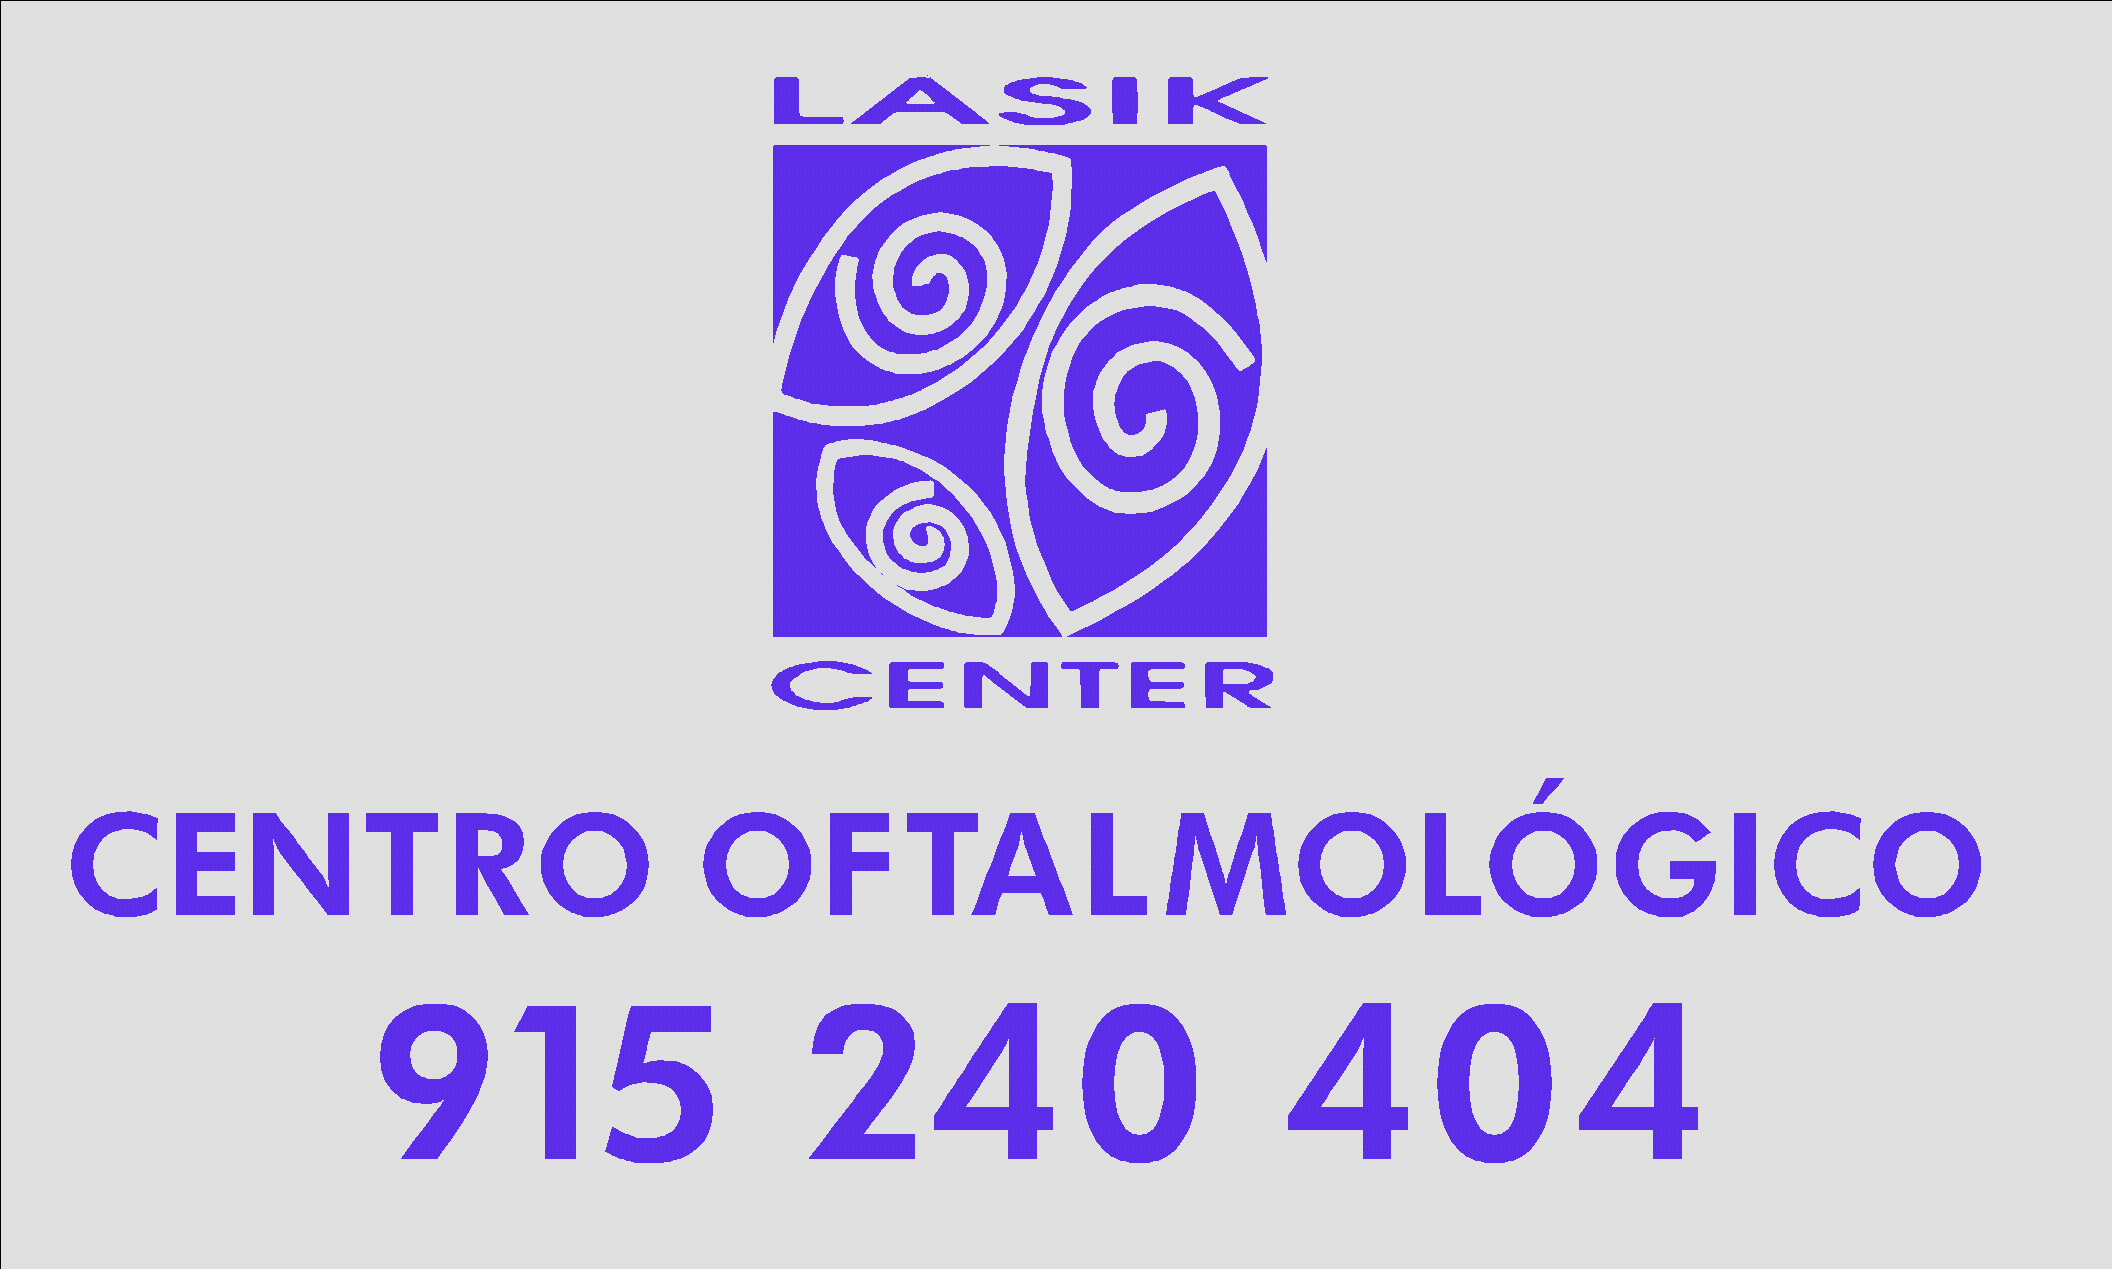 Logotipo de la clínica LASIK CENTER CLINICA OFTALMOLOGICA